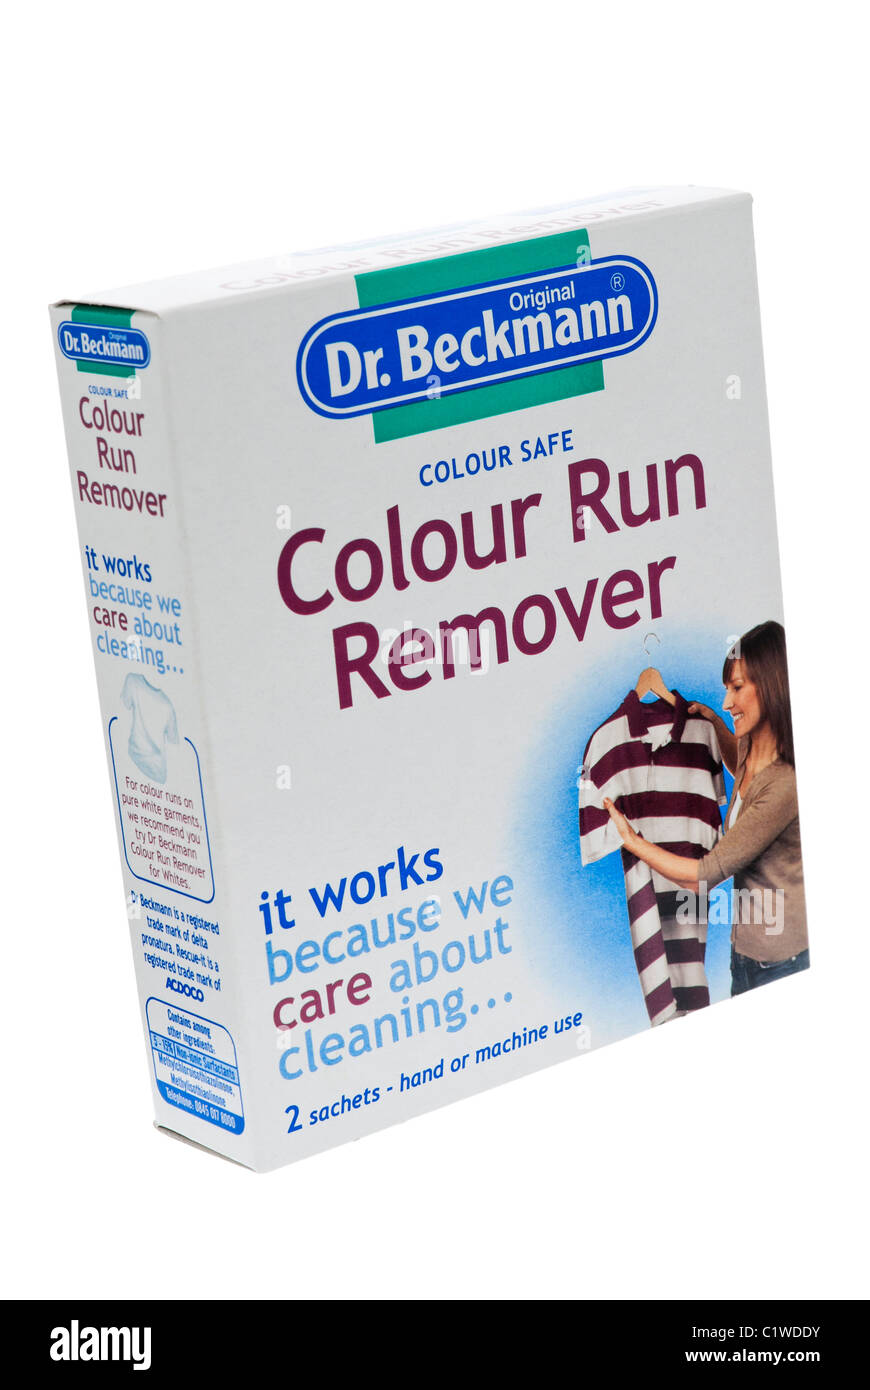 https://c8.alamy.com/comp/C1WDDY/dr-beckmann-colour-run-remover-C1WDDY.jpg